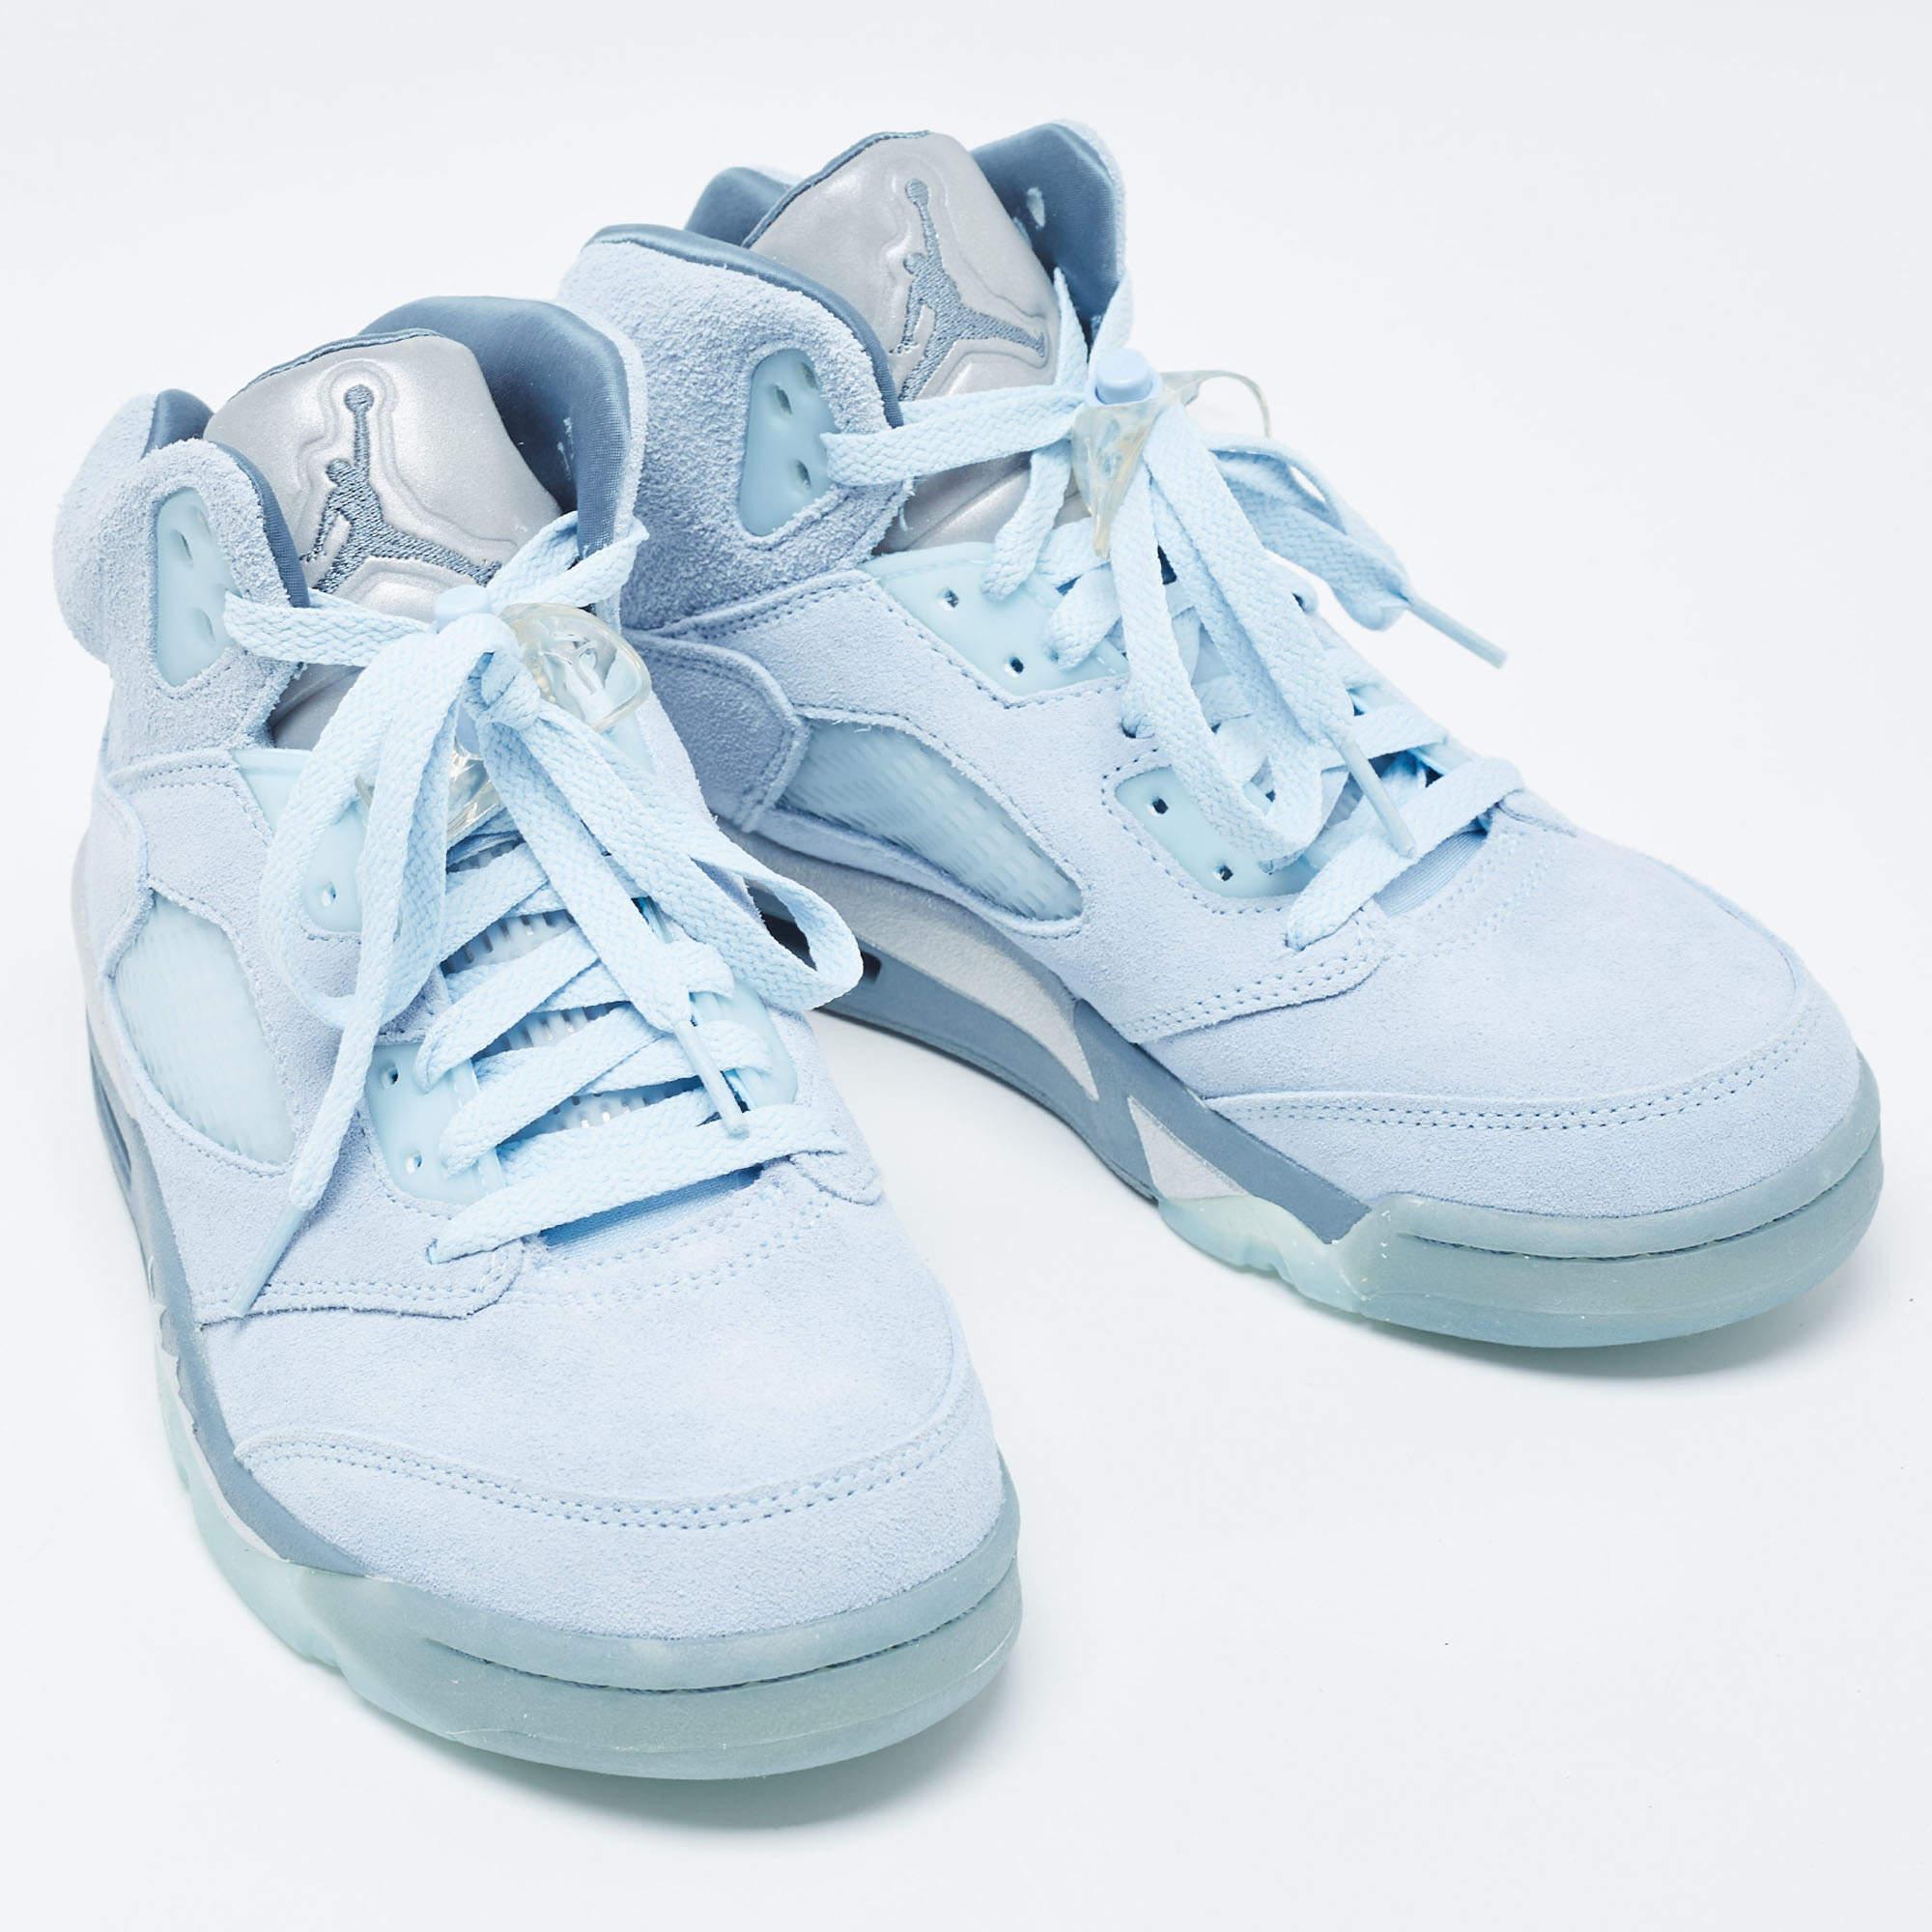 Women's Air Jordans Blue Suede Air Jordan 1 High Top Sneakers Size 38